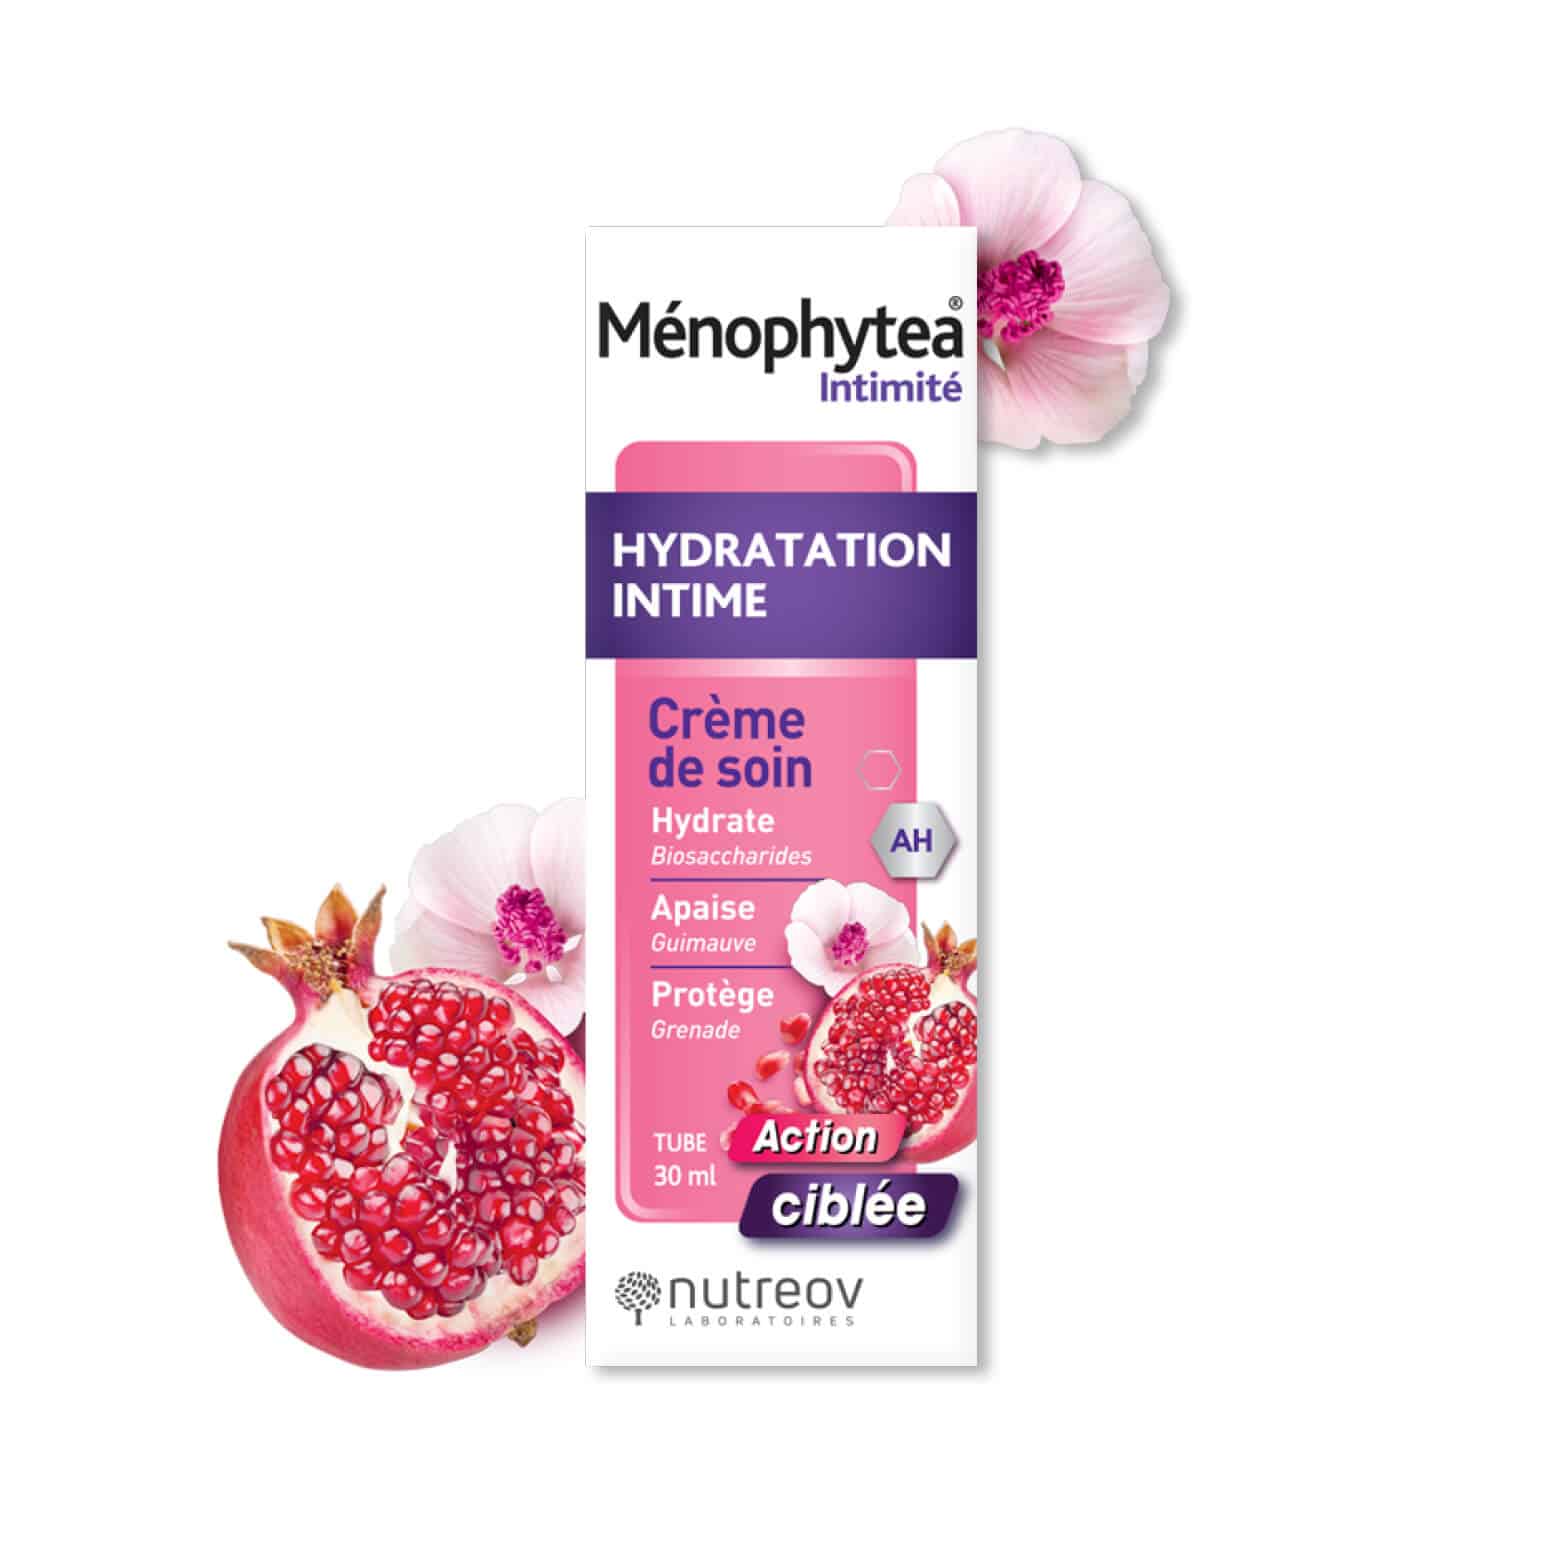 Ménophytea® Intimate Hydratation cream